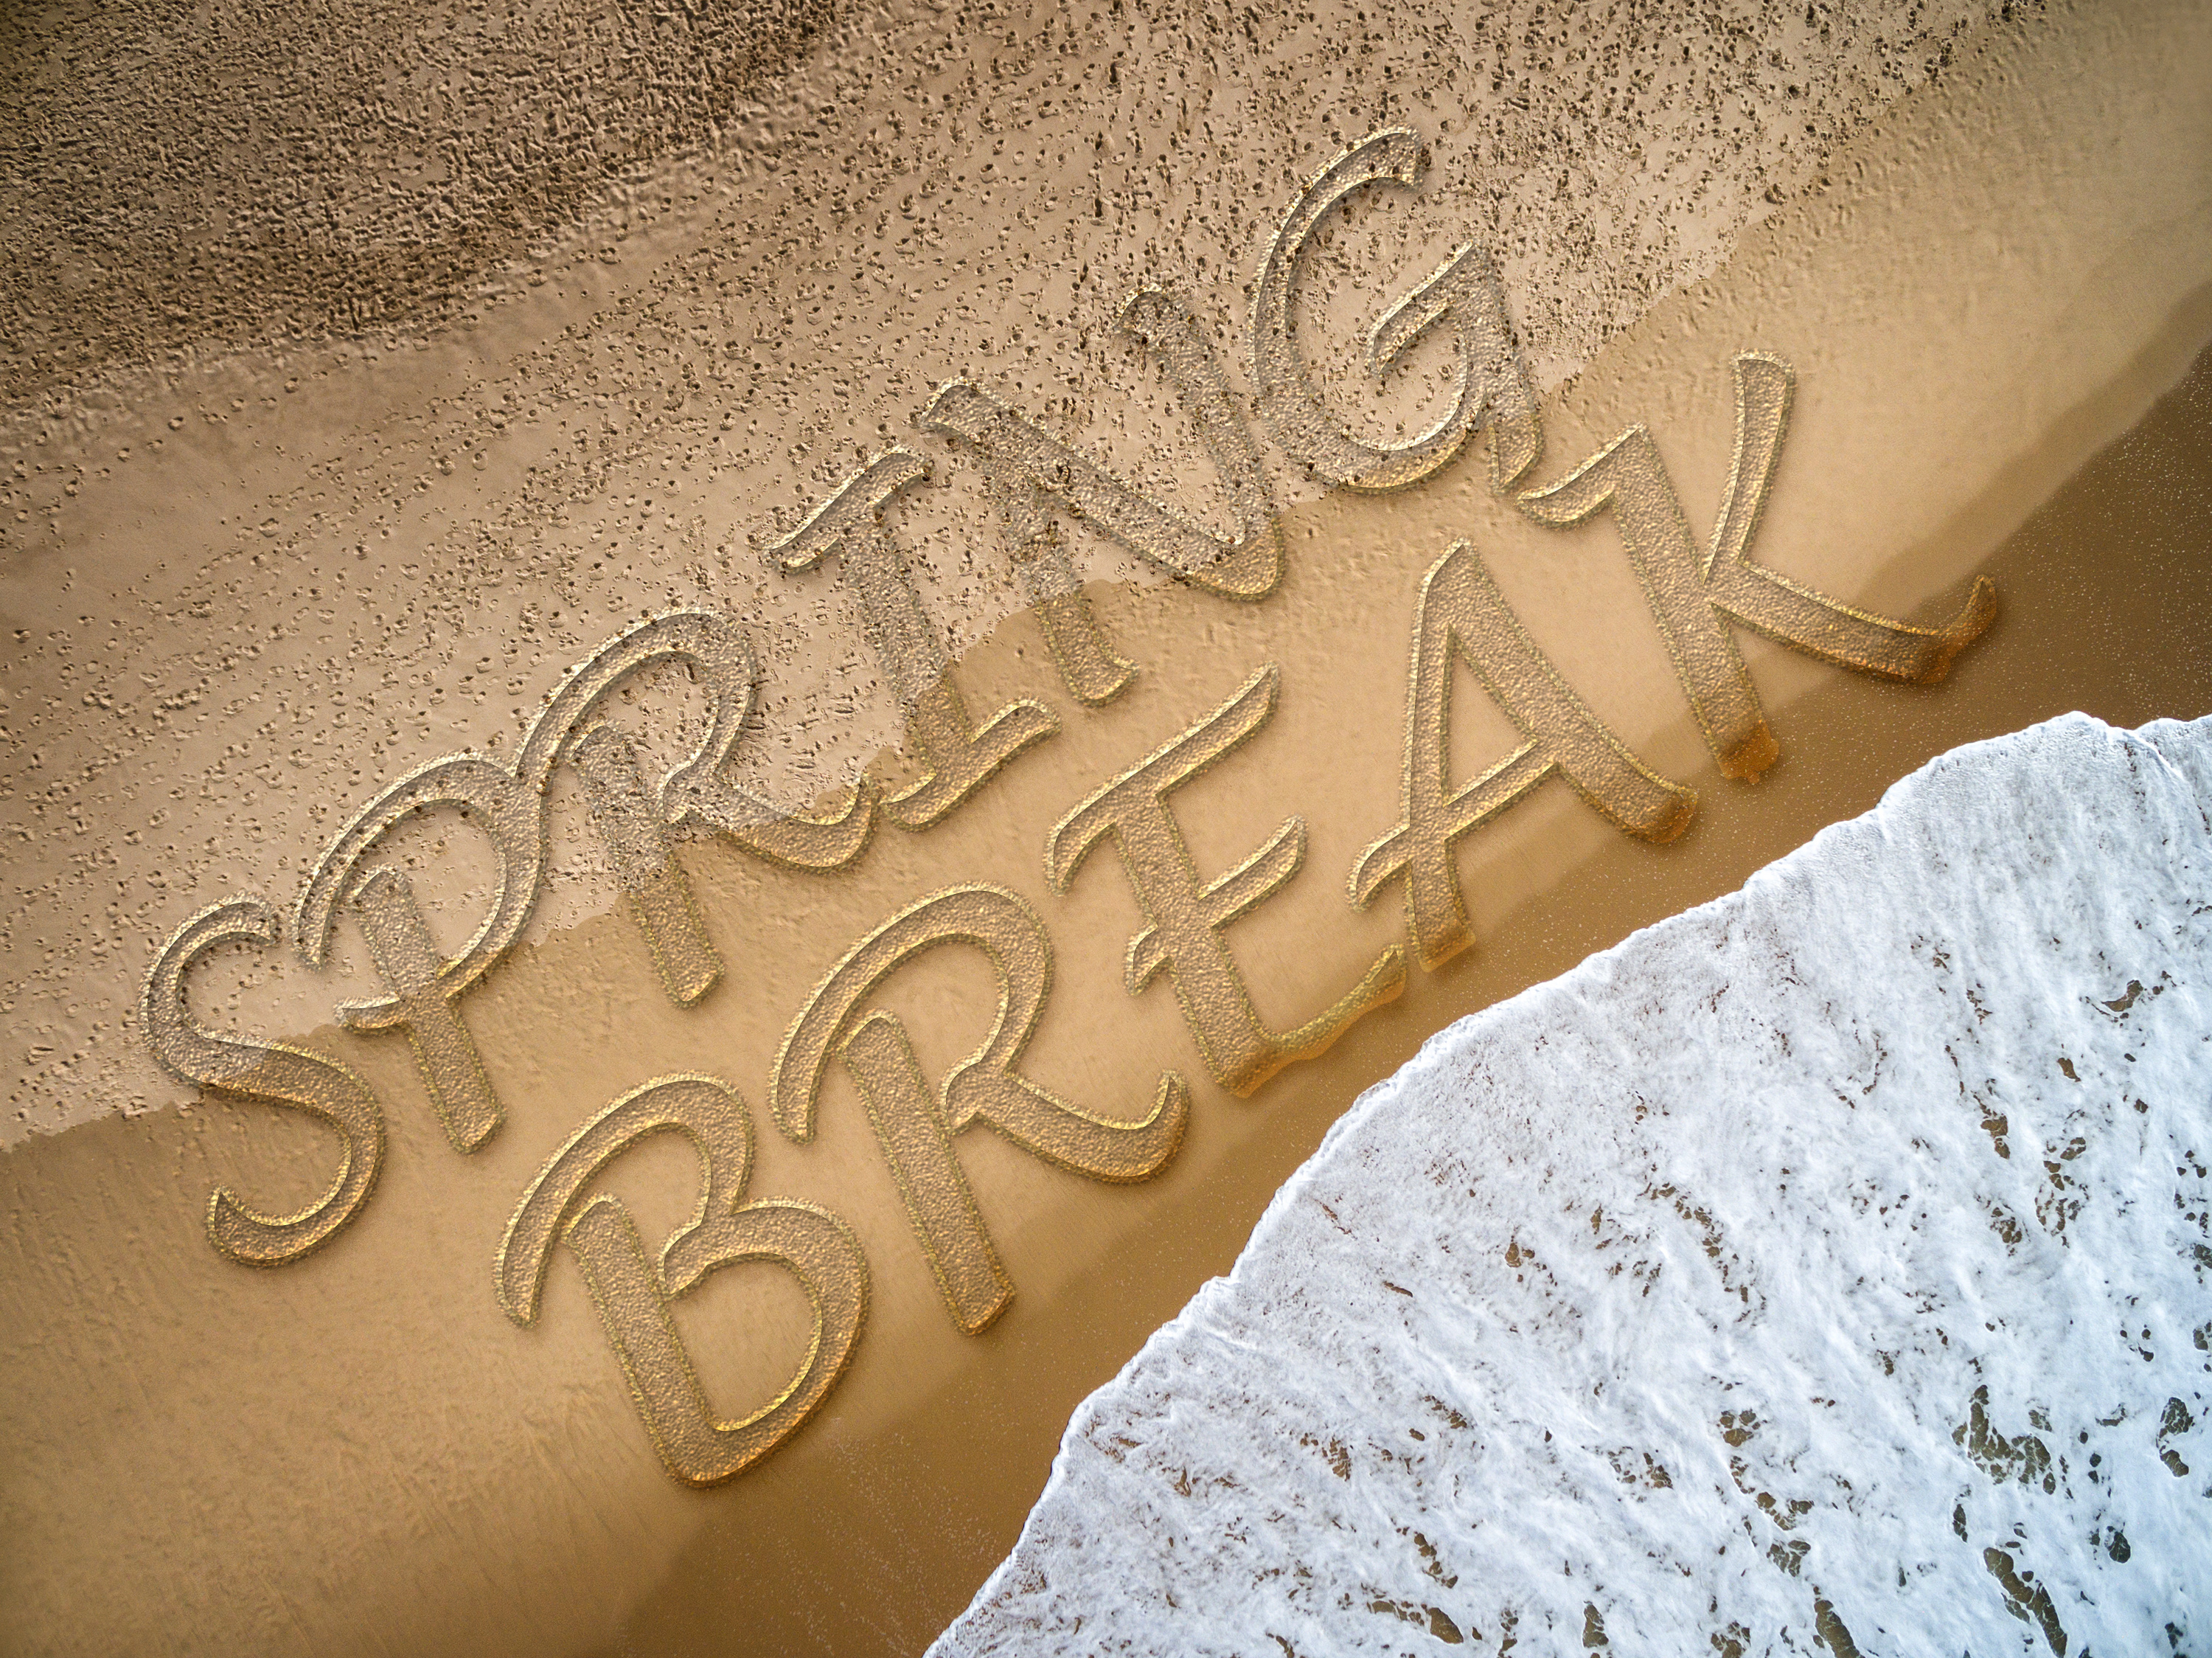 SPring break written on the beach